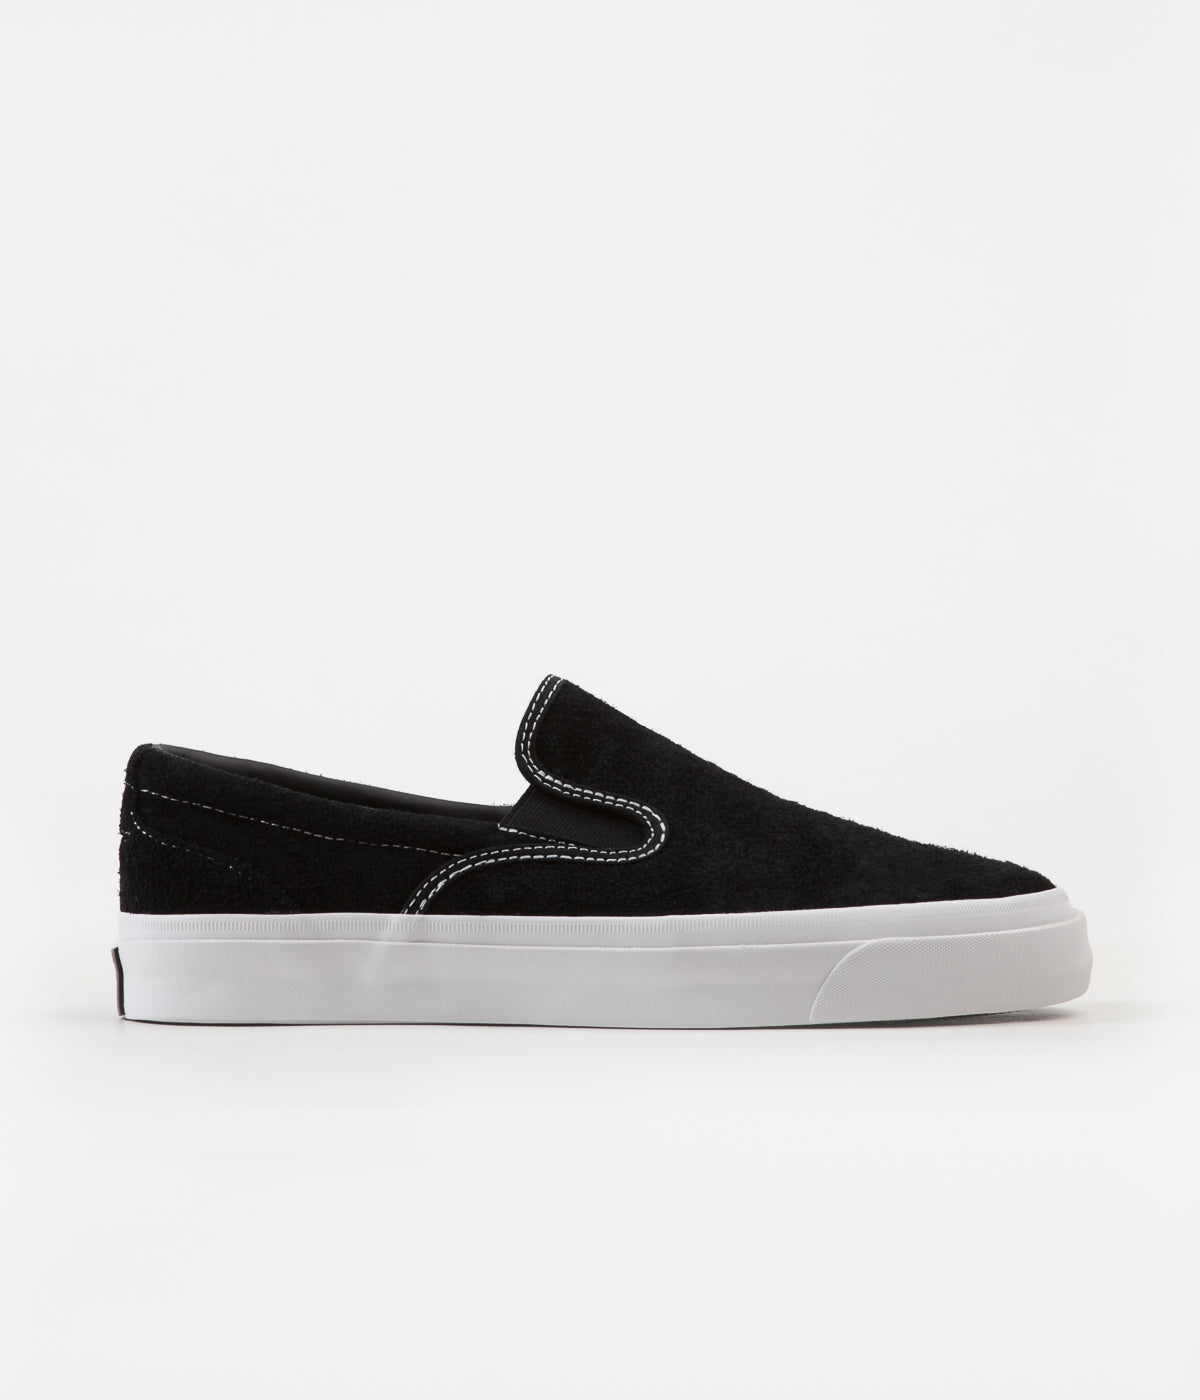 Converse One Star CC Slip On Shoes - Black / Black / White | Flatspot